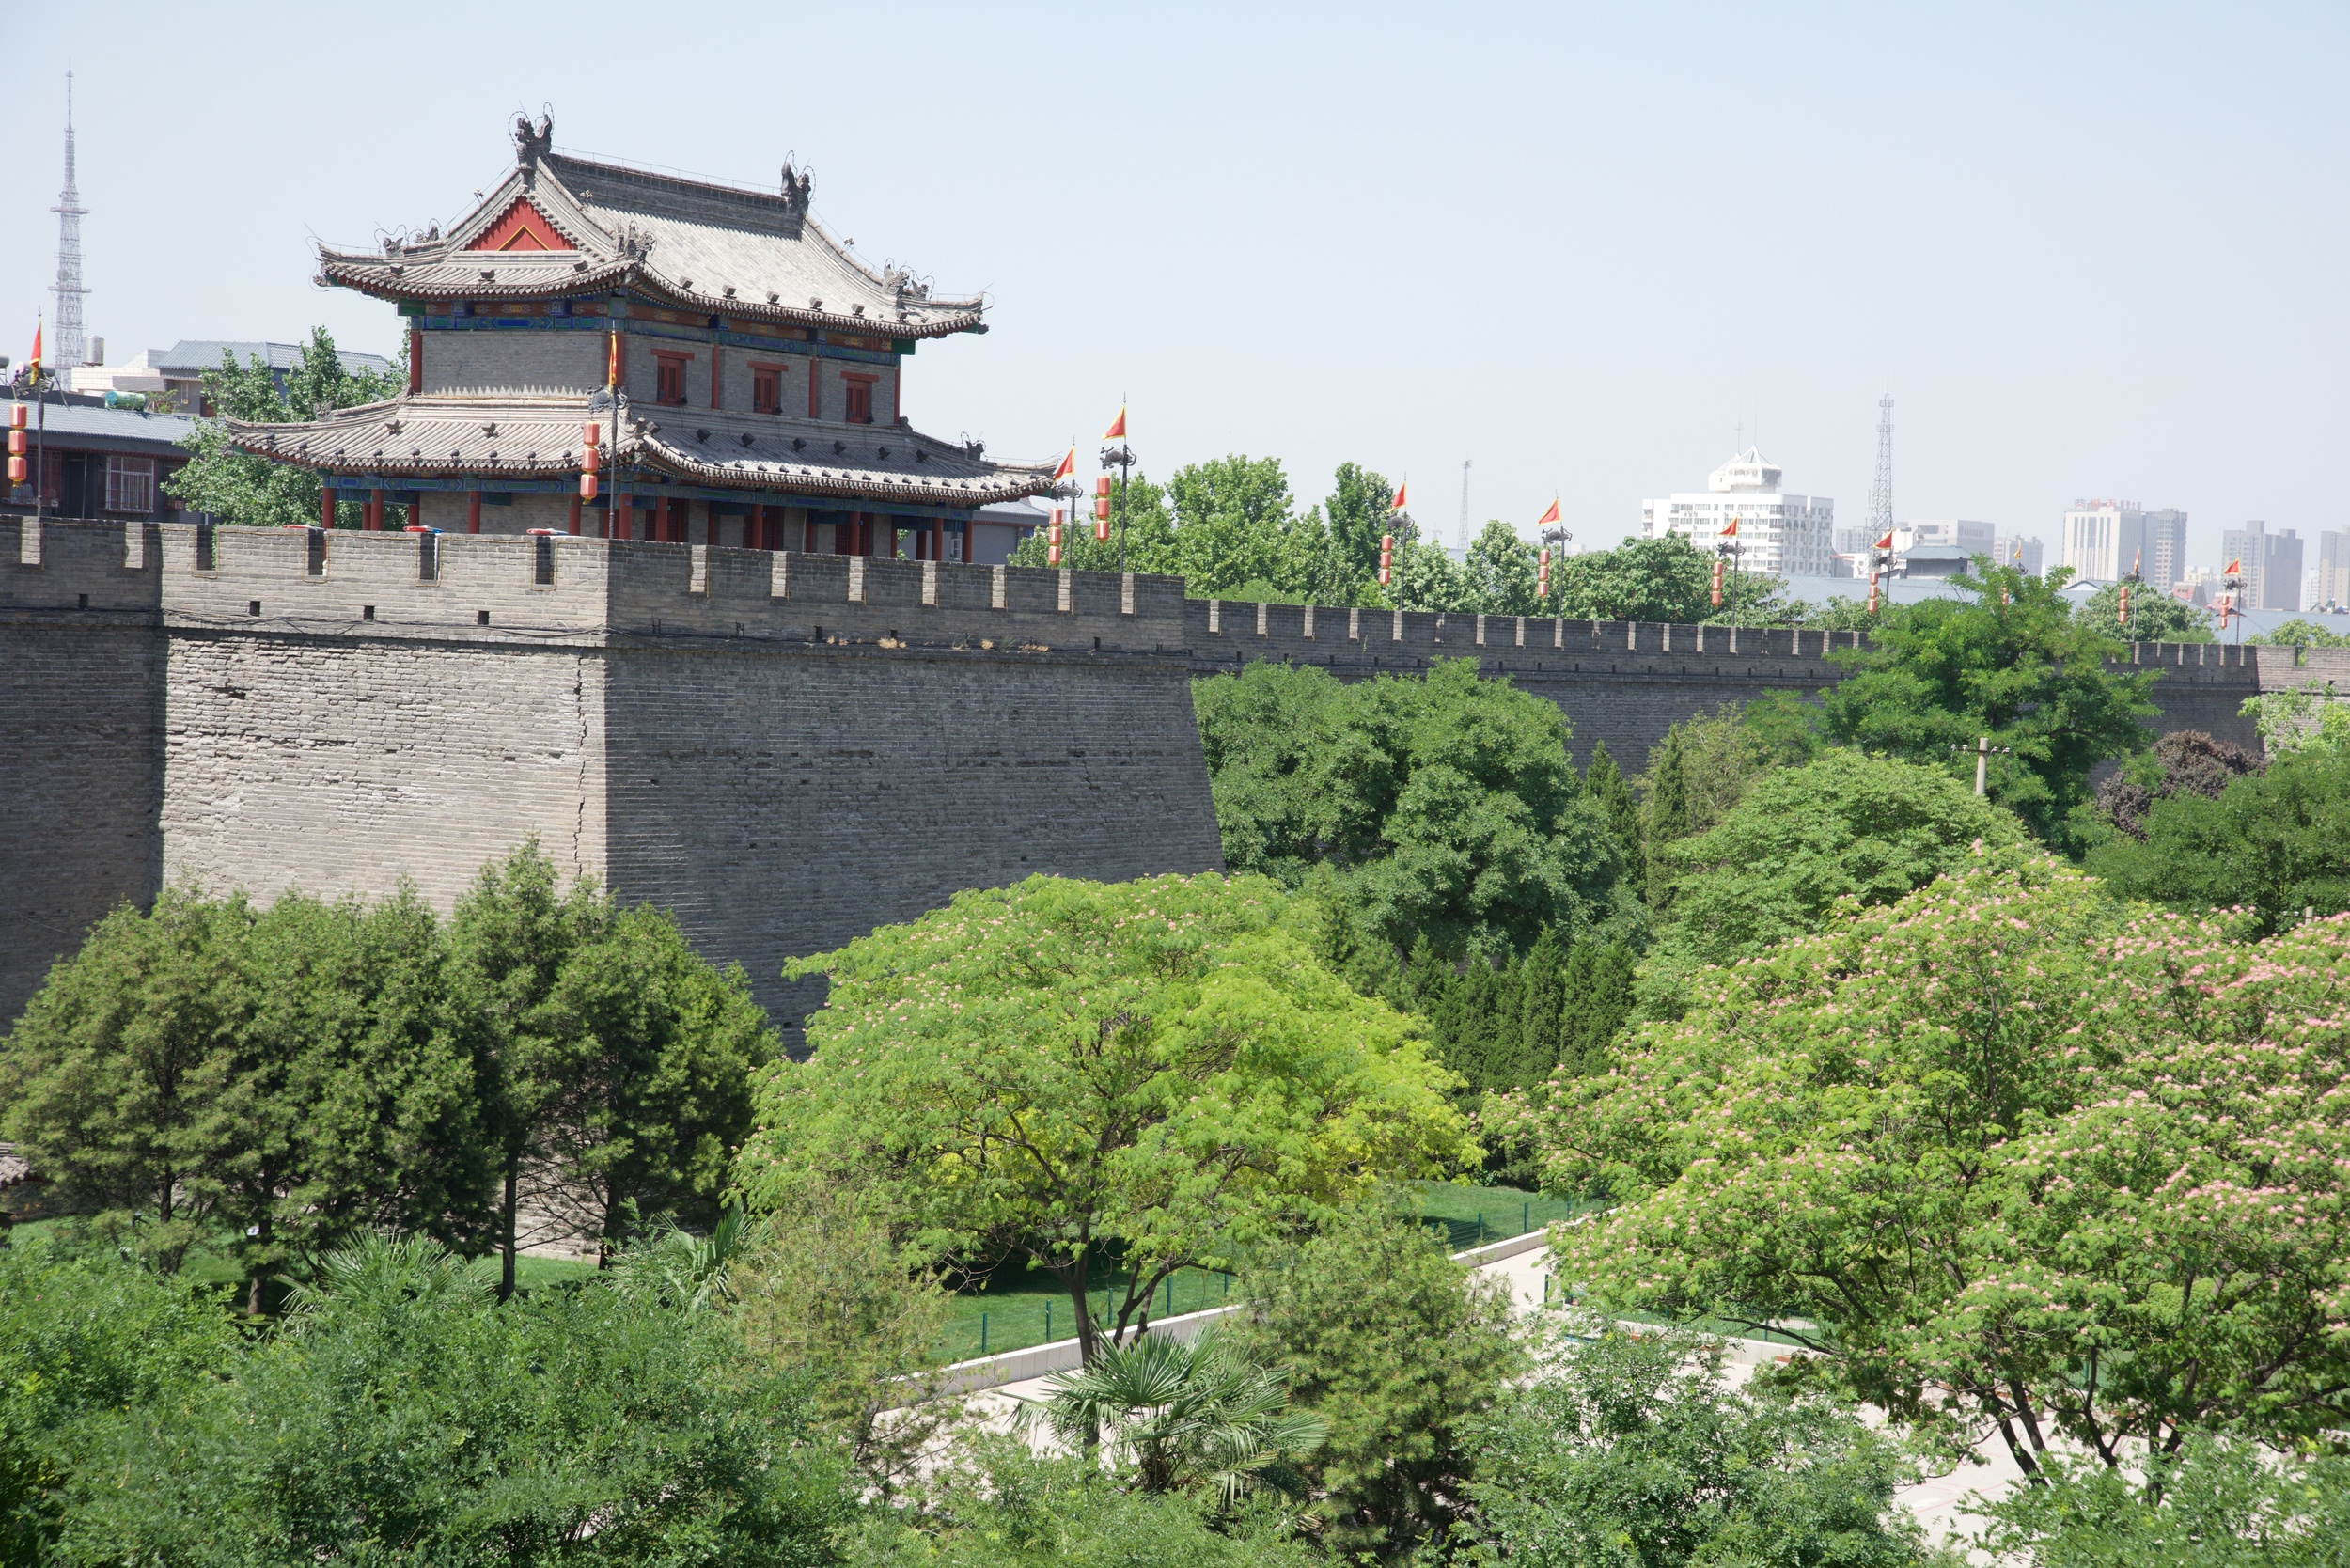  View&nbsp;from Xi'an City Wall, Xi'an, China 